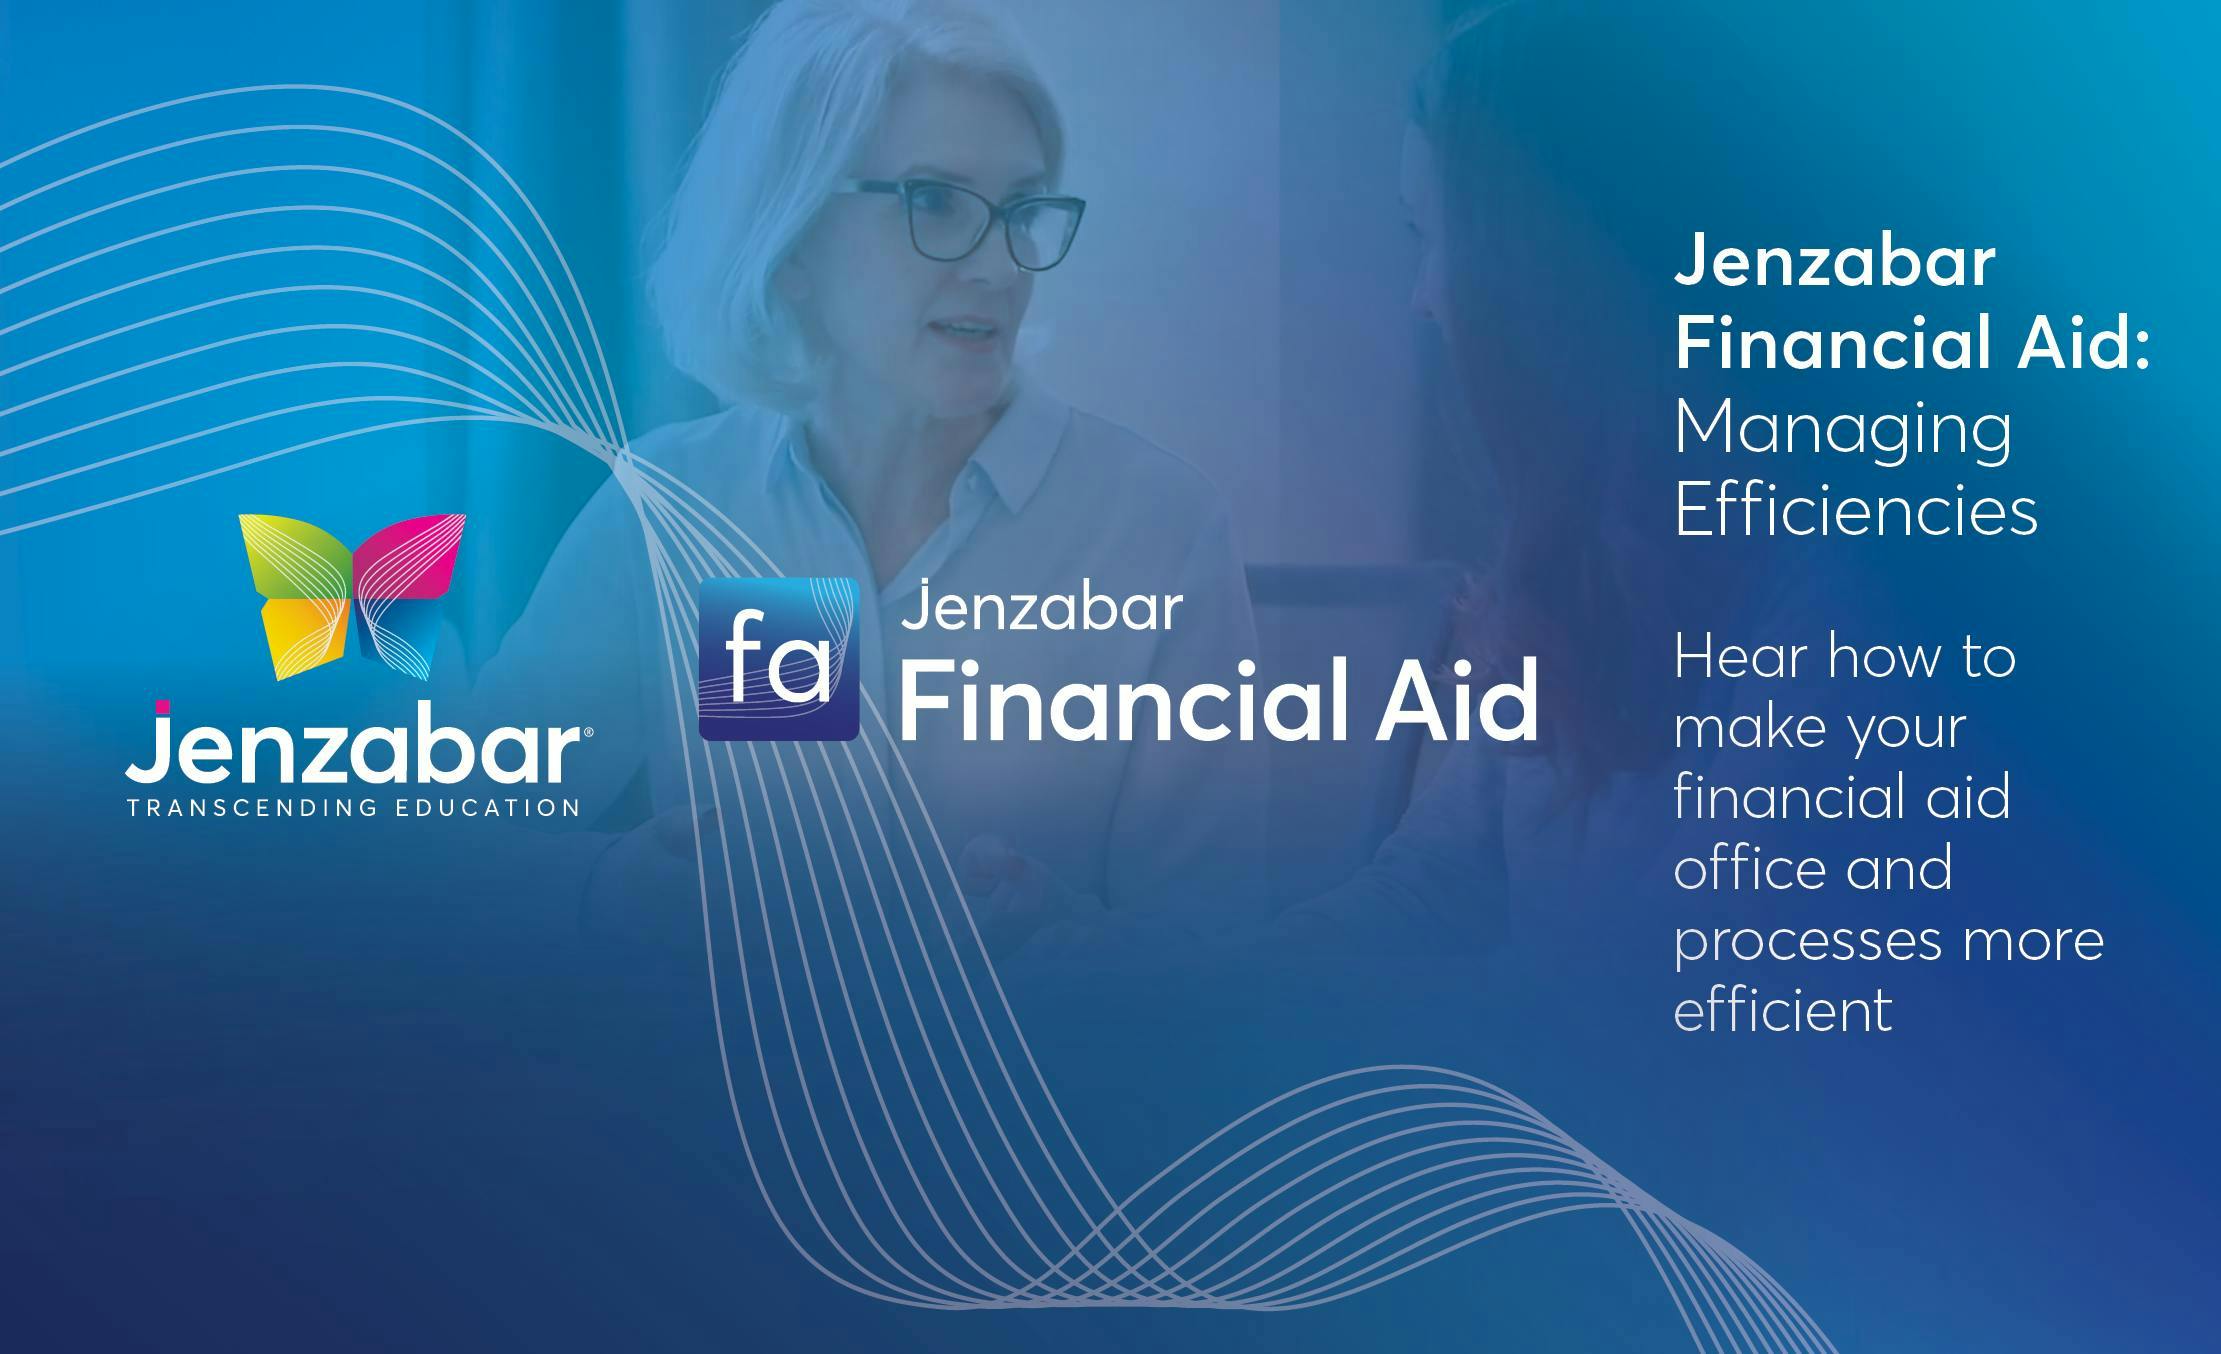 Video: Jenzabar Financial Aid: Managing Efficiencies